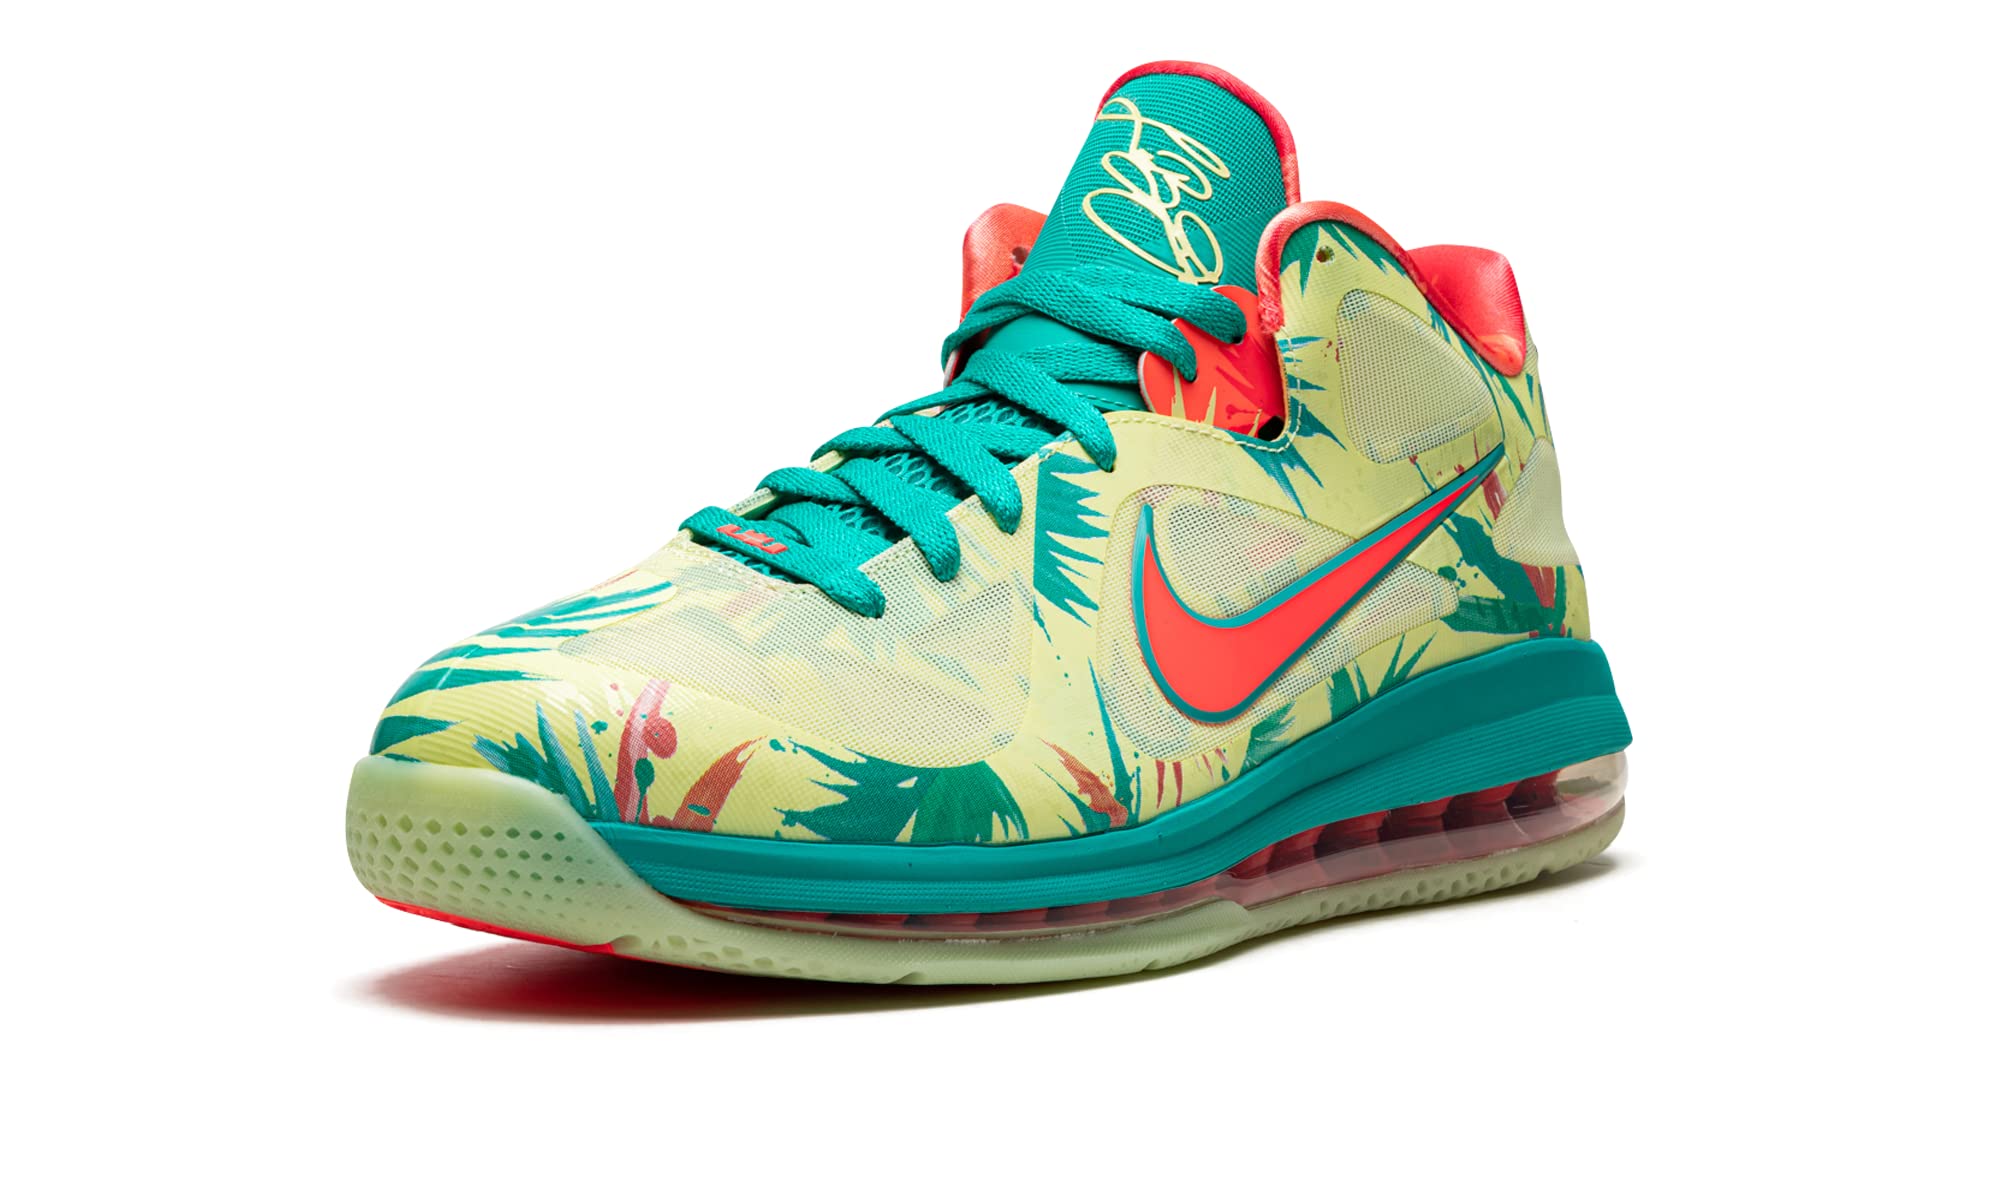 Nike Mens LeBron IX Low Basketball Shoes (11) - image 4 of 6